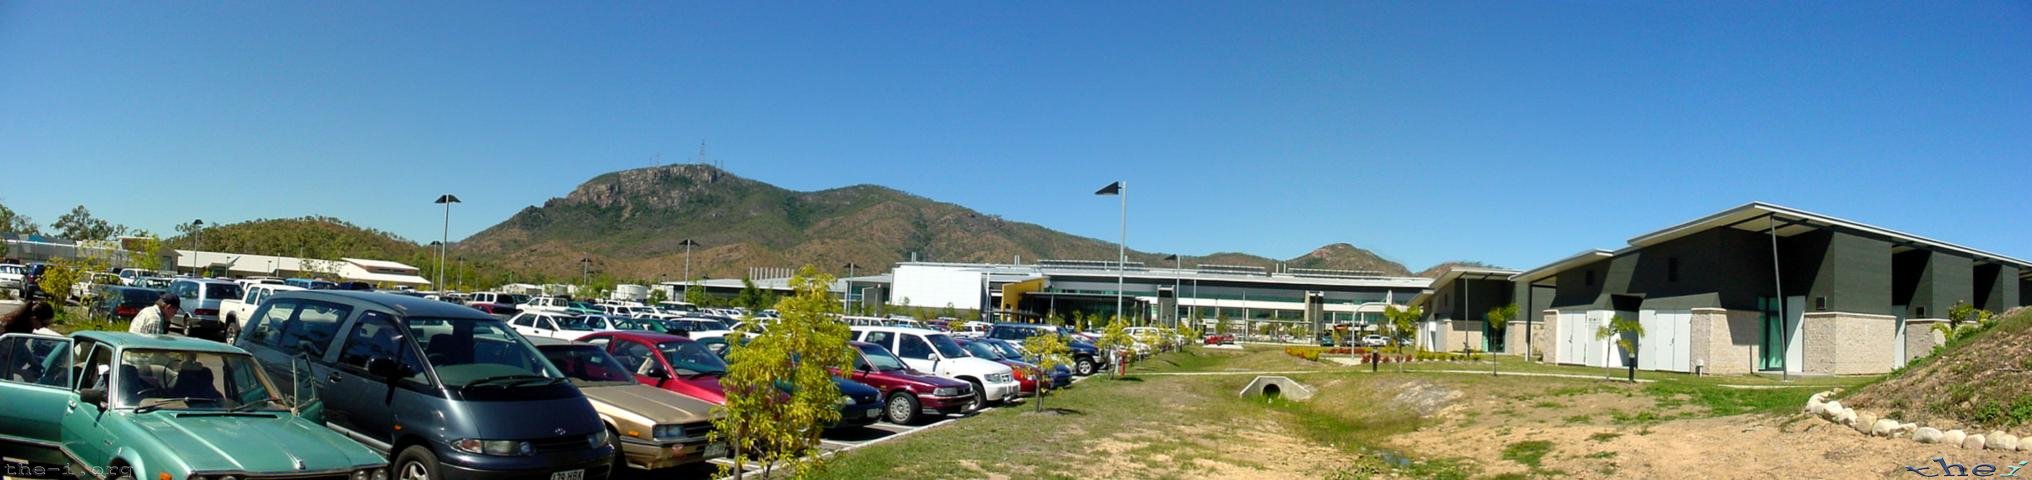 Townsville Hospital